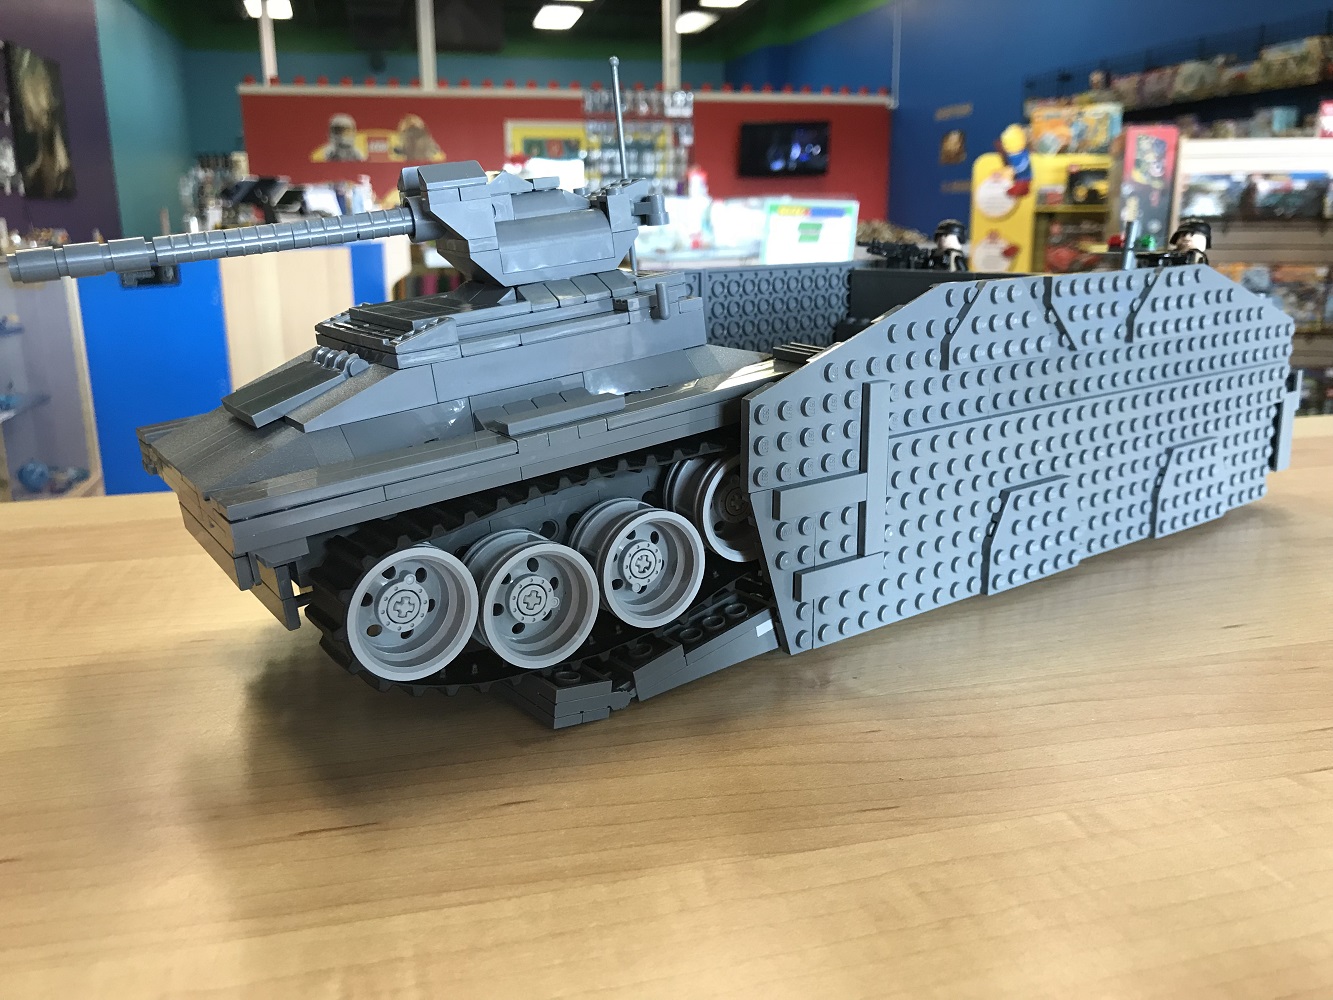 Lego tank and landing craft.